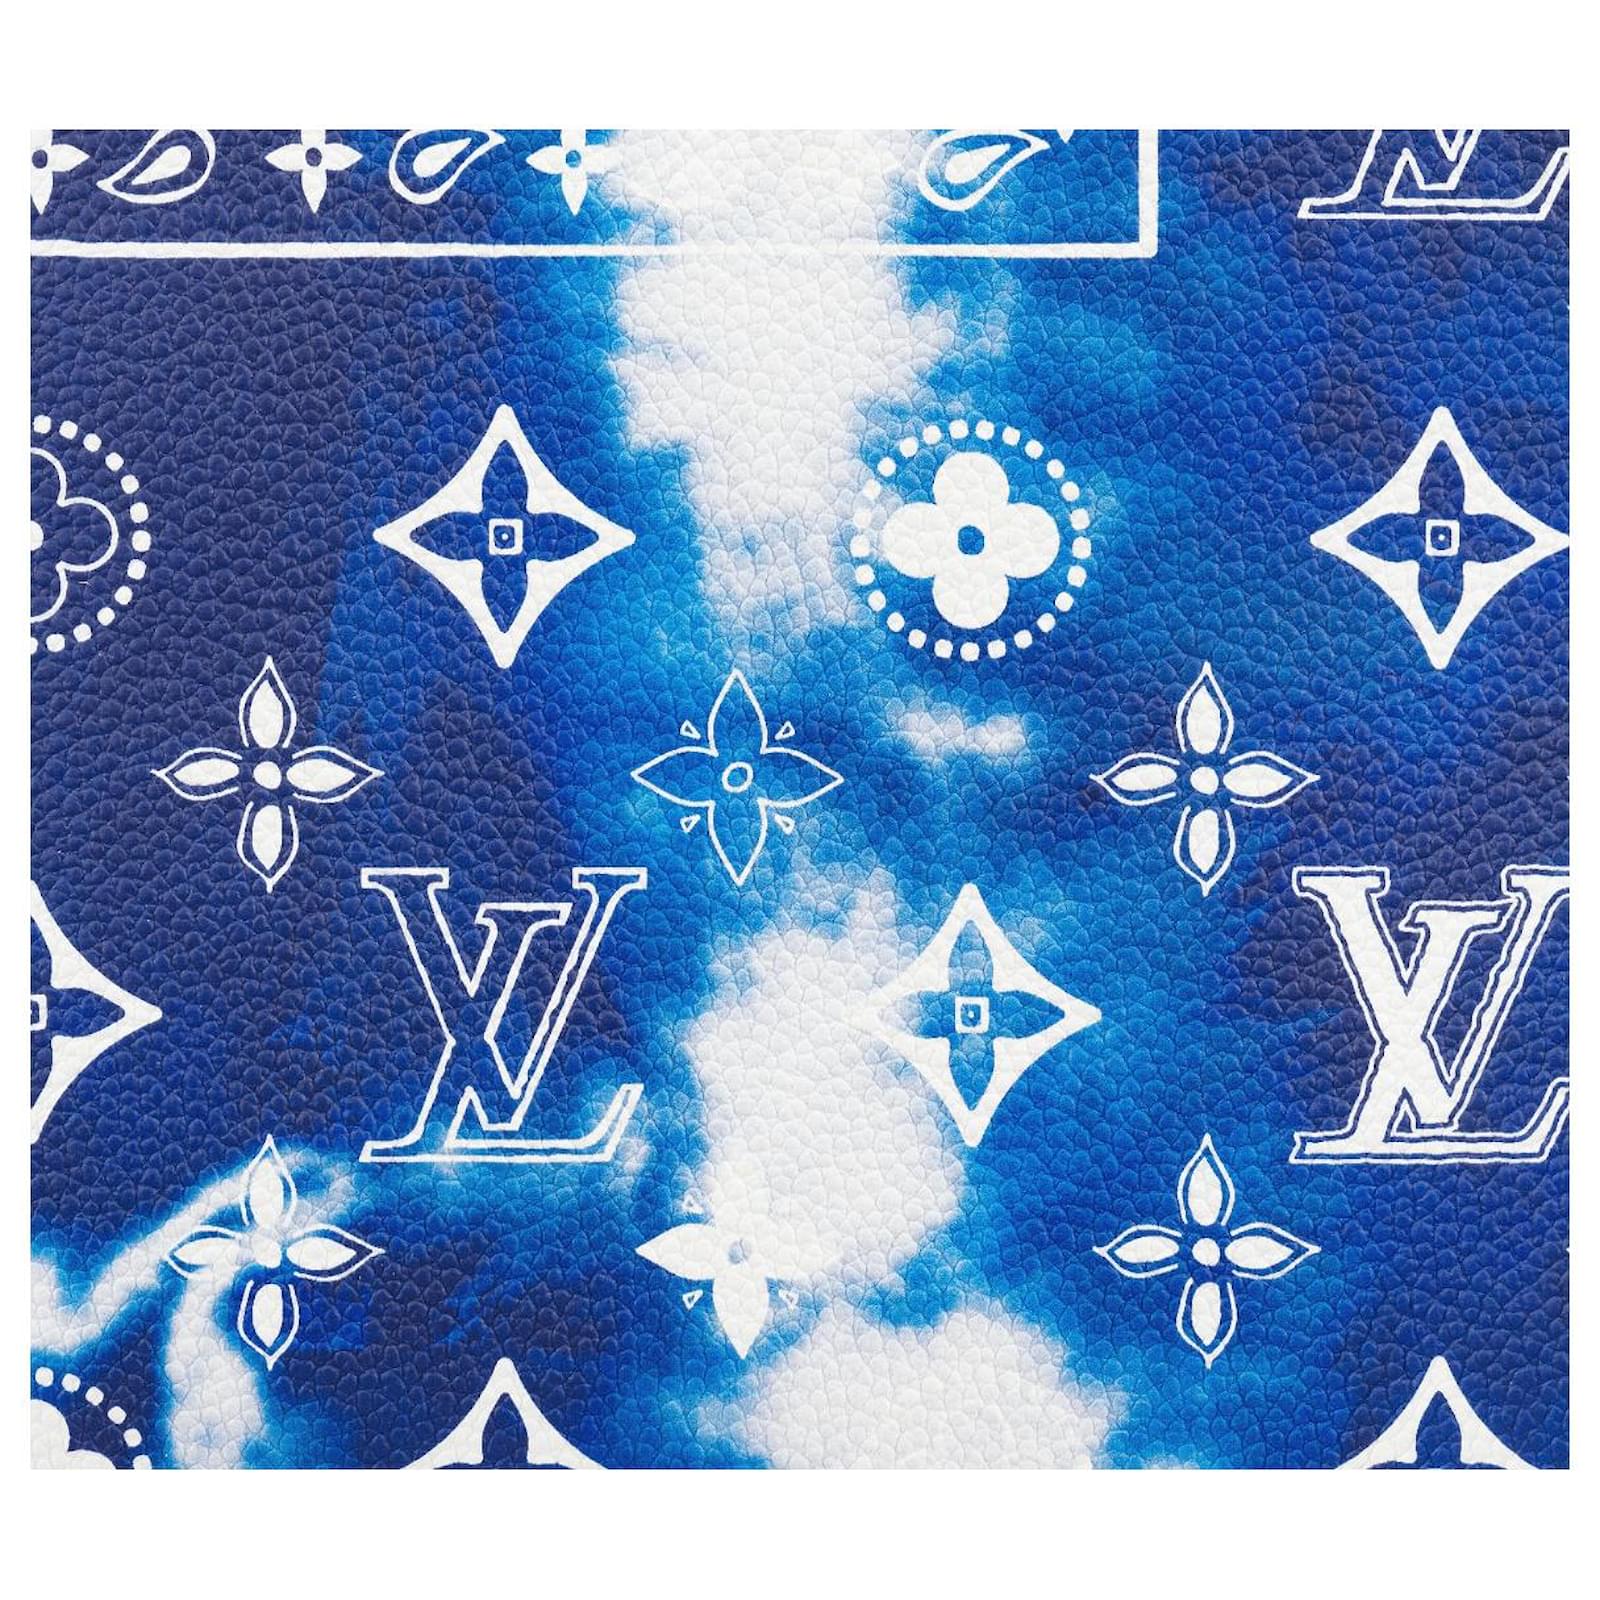 Louis Vuitton Bandana Blue 50 Keepall Bandouliere Duffle Bag (WRZX